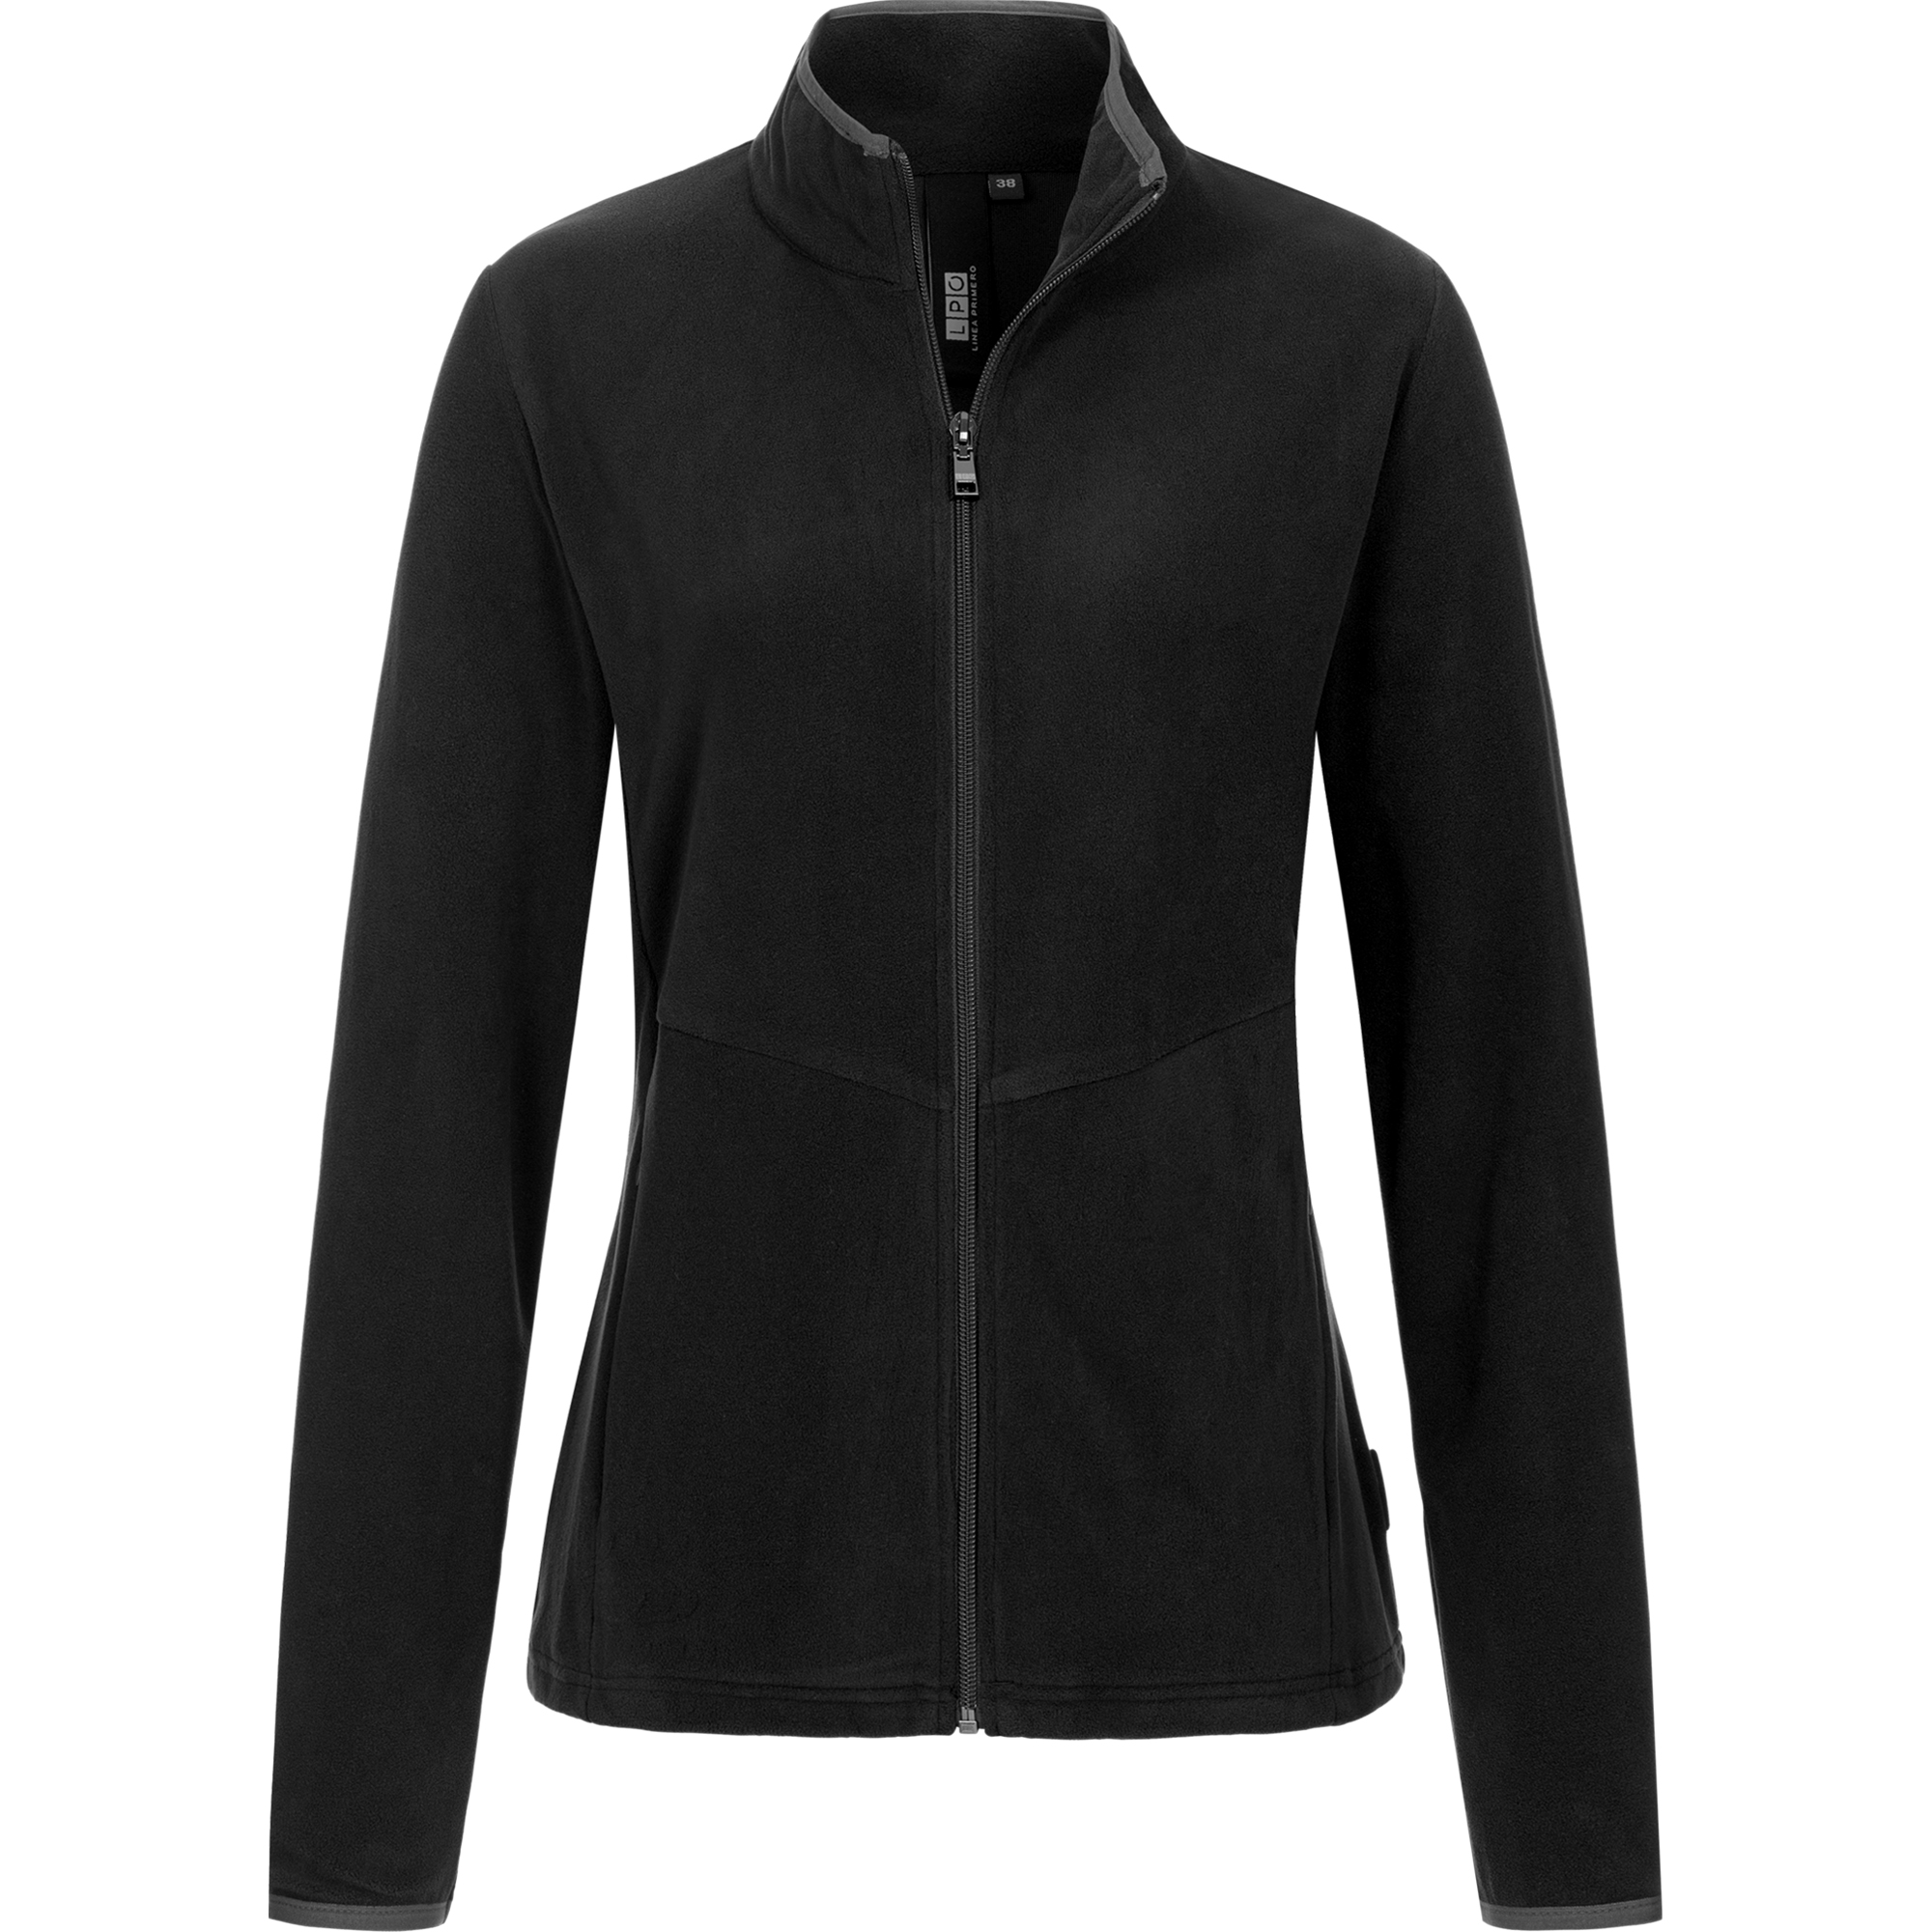 Schöffel Fleecejacke ohne Kapuze »Fleece Jacket Leona3«, kaufen